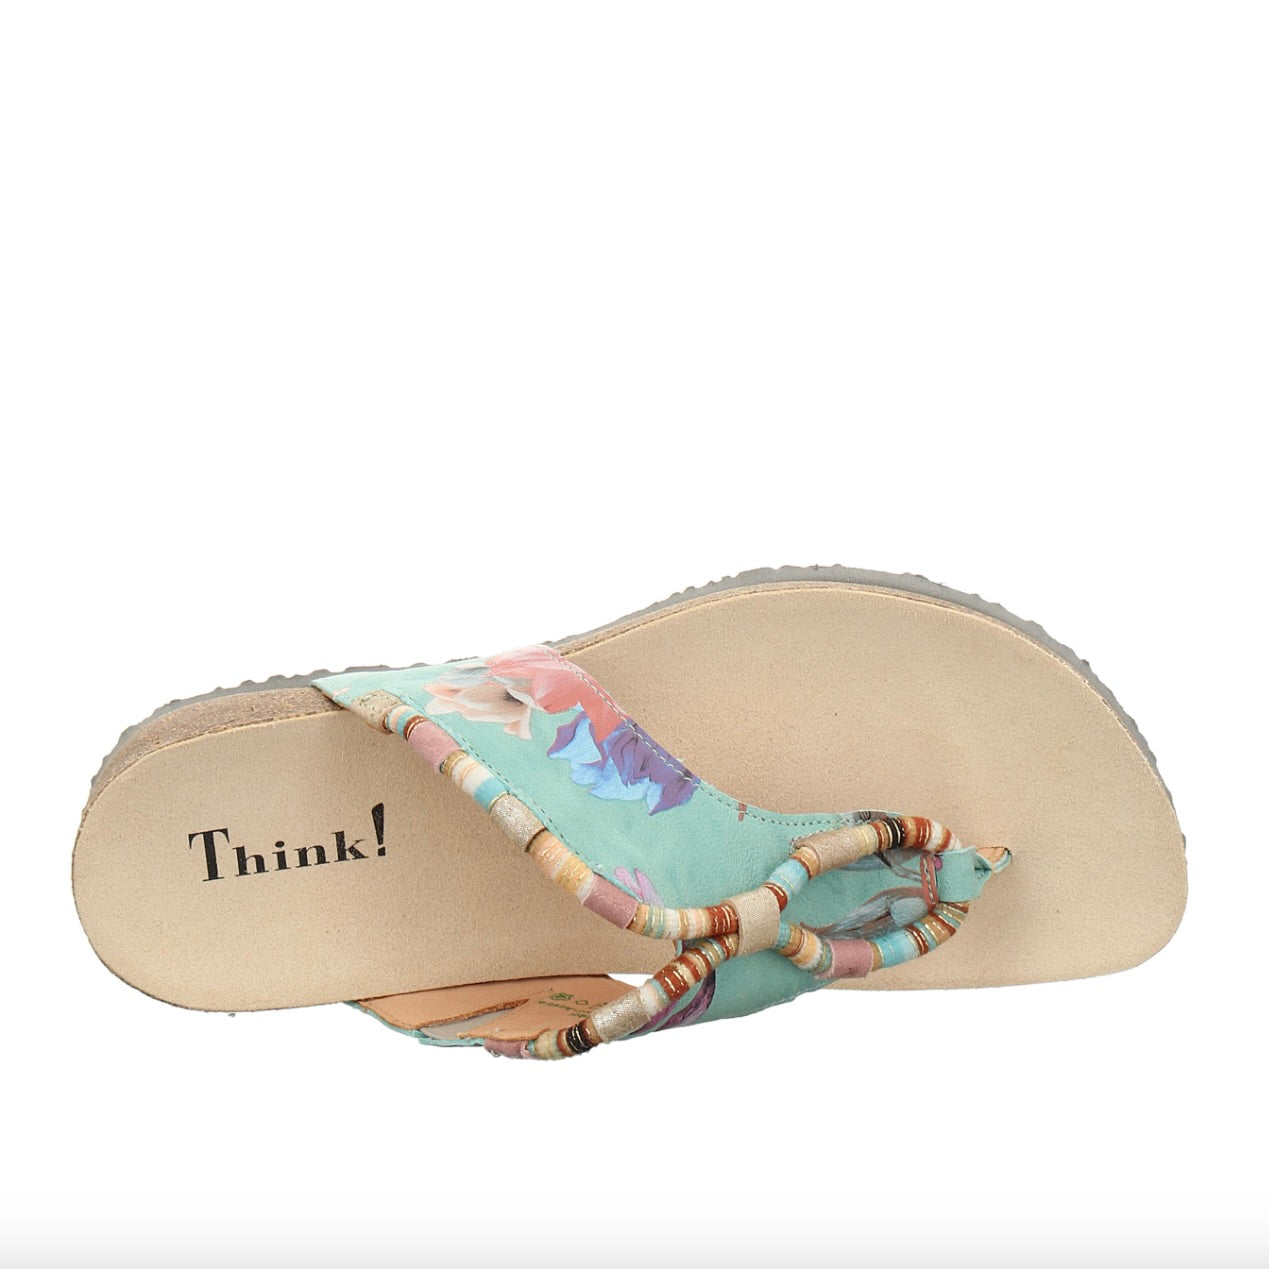 Think! "211-7010" Turquoise Combo - Wedge Sandal